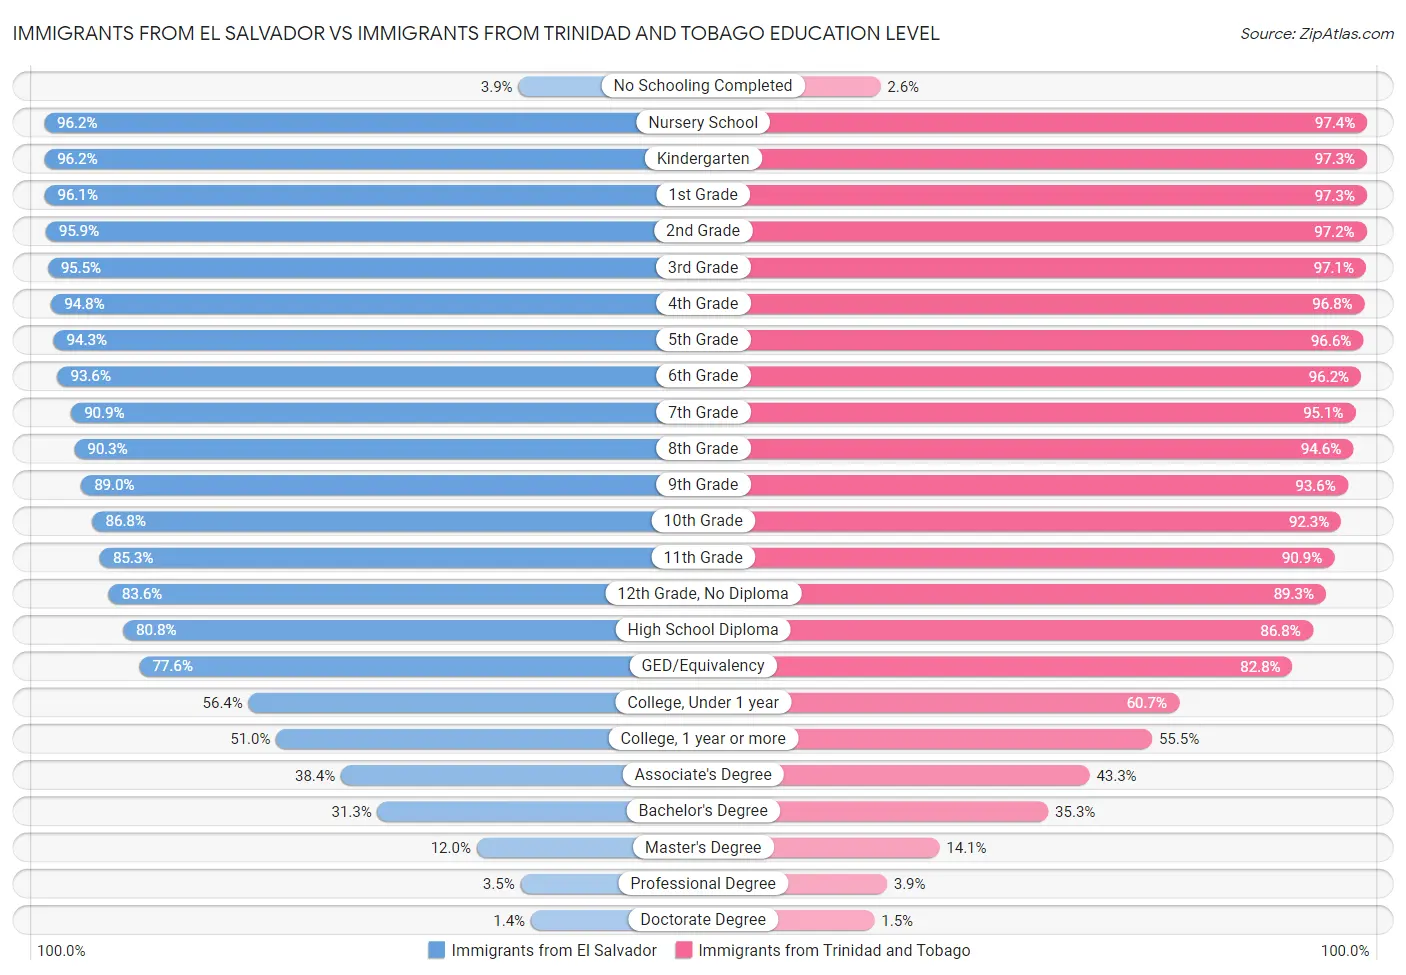 Immigrants from El Salvador vs Immigrants from Trinidad and Tobago Education Level